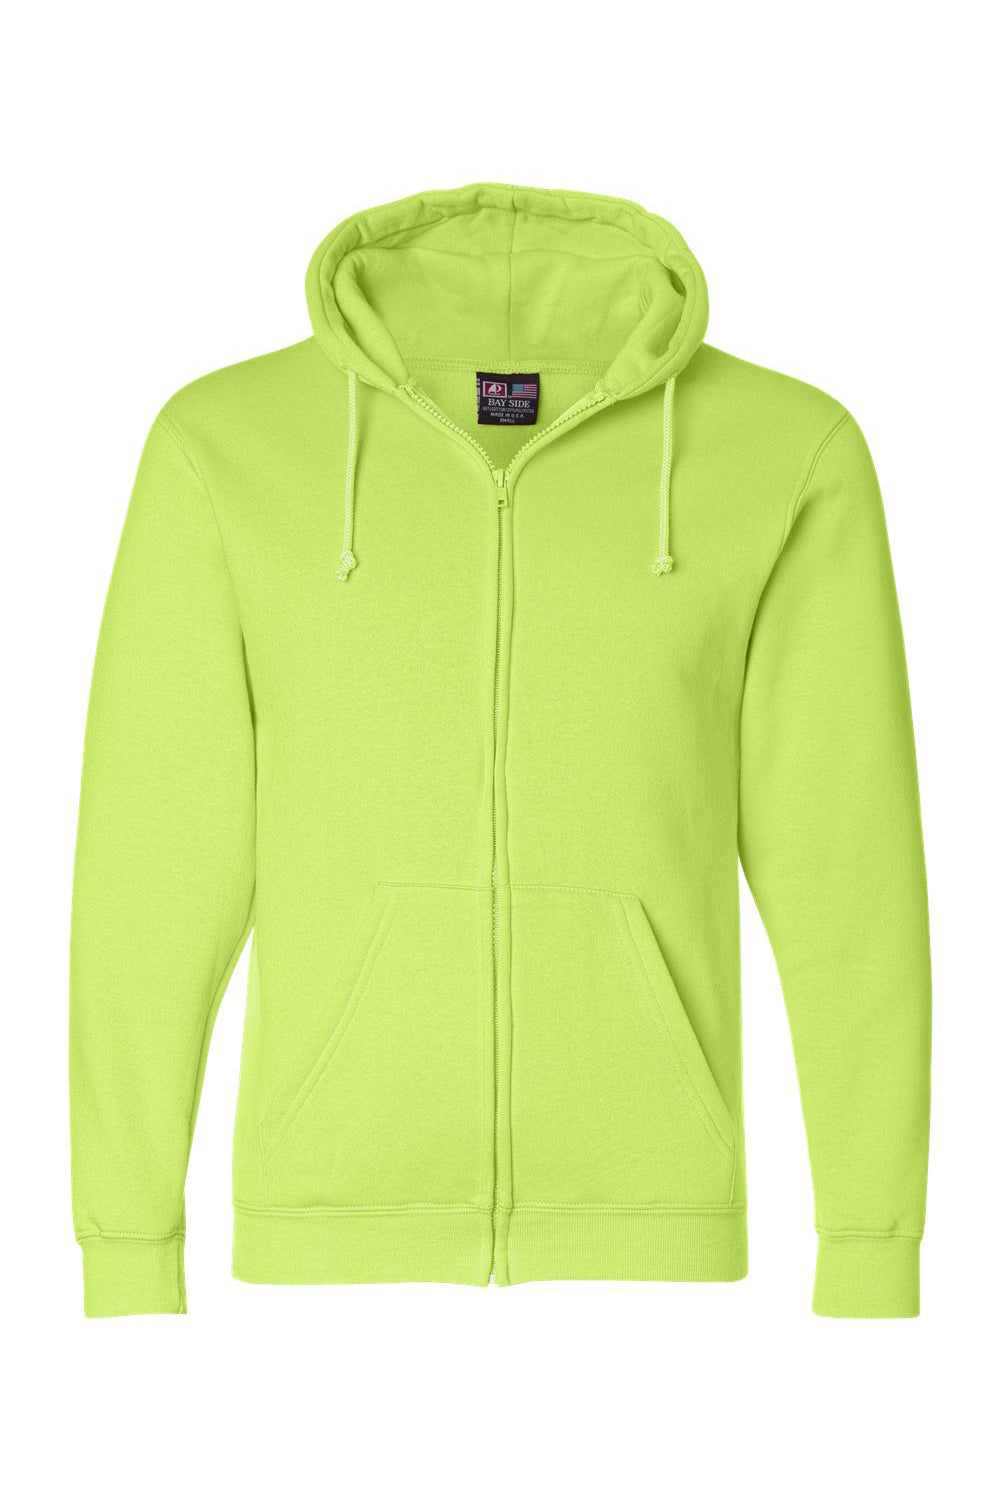 Bayside BA900 Mens USA Made Full Zip Hooded Sweatshirt Hoodie Lime Green Flat Front